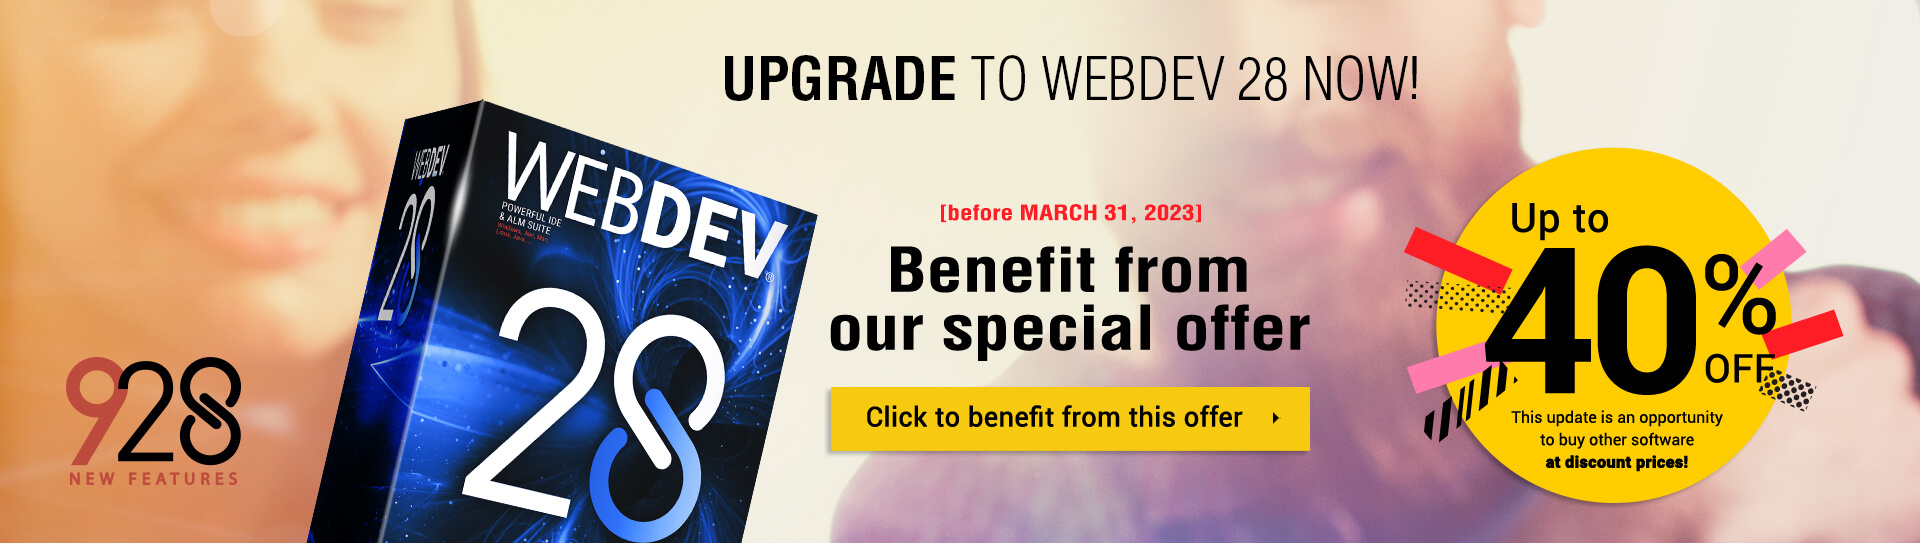 Upgrade to WEBDEV 28 now!